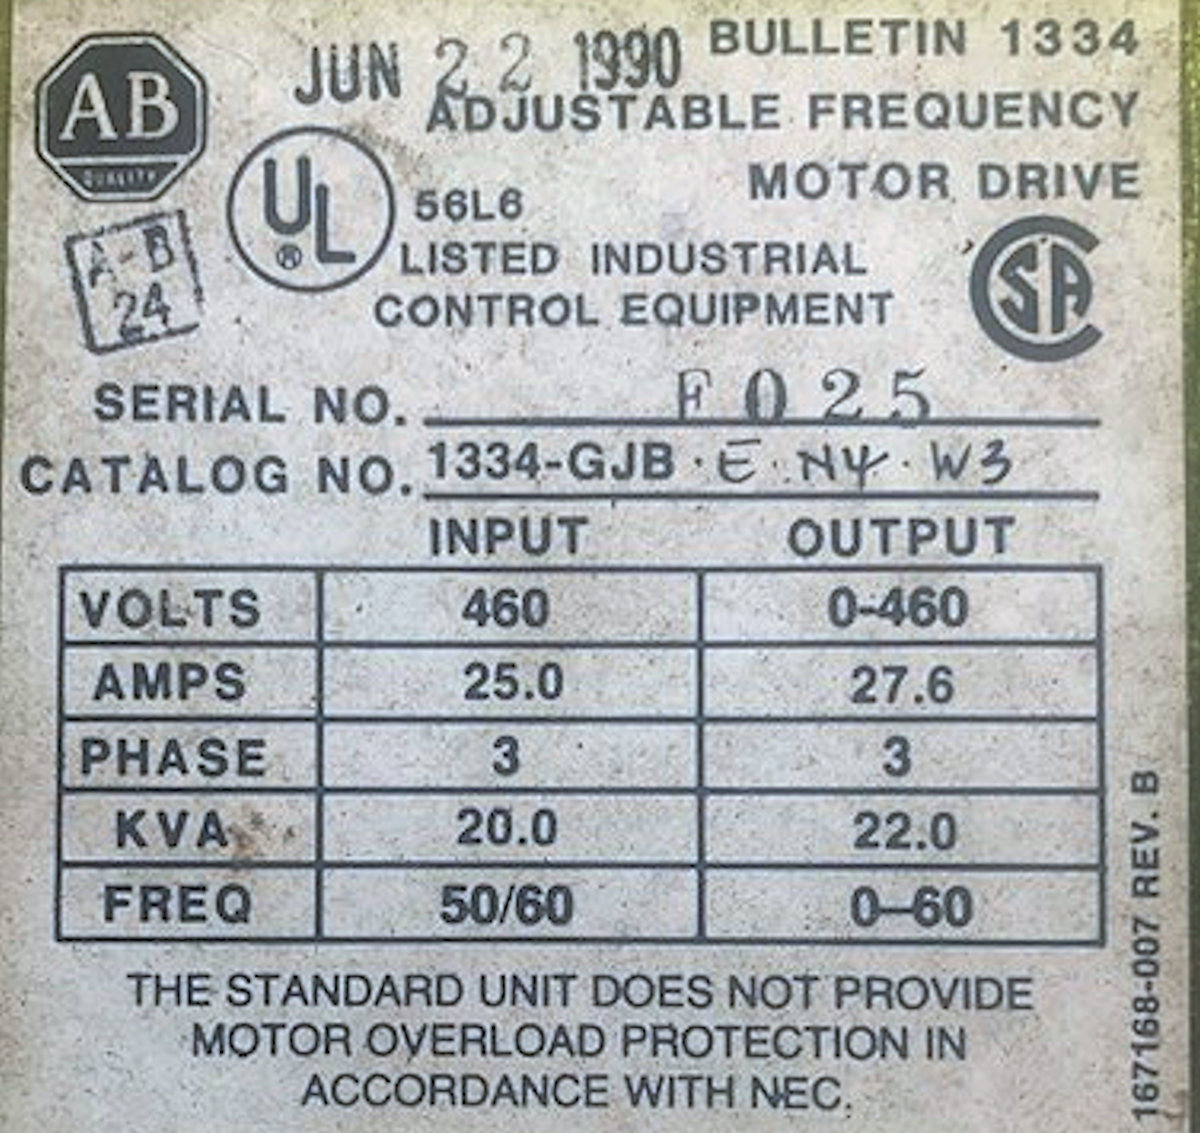 Allen-bradley Adjustable Frequency Ac Motor Drive)